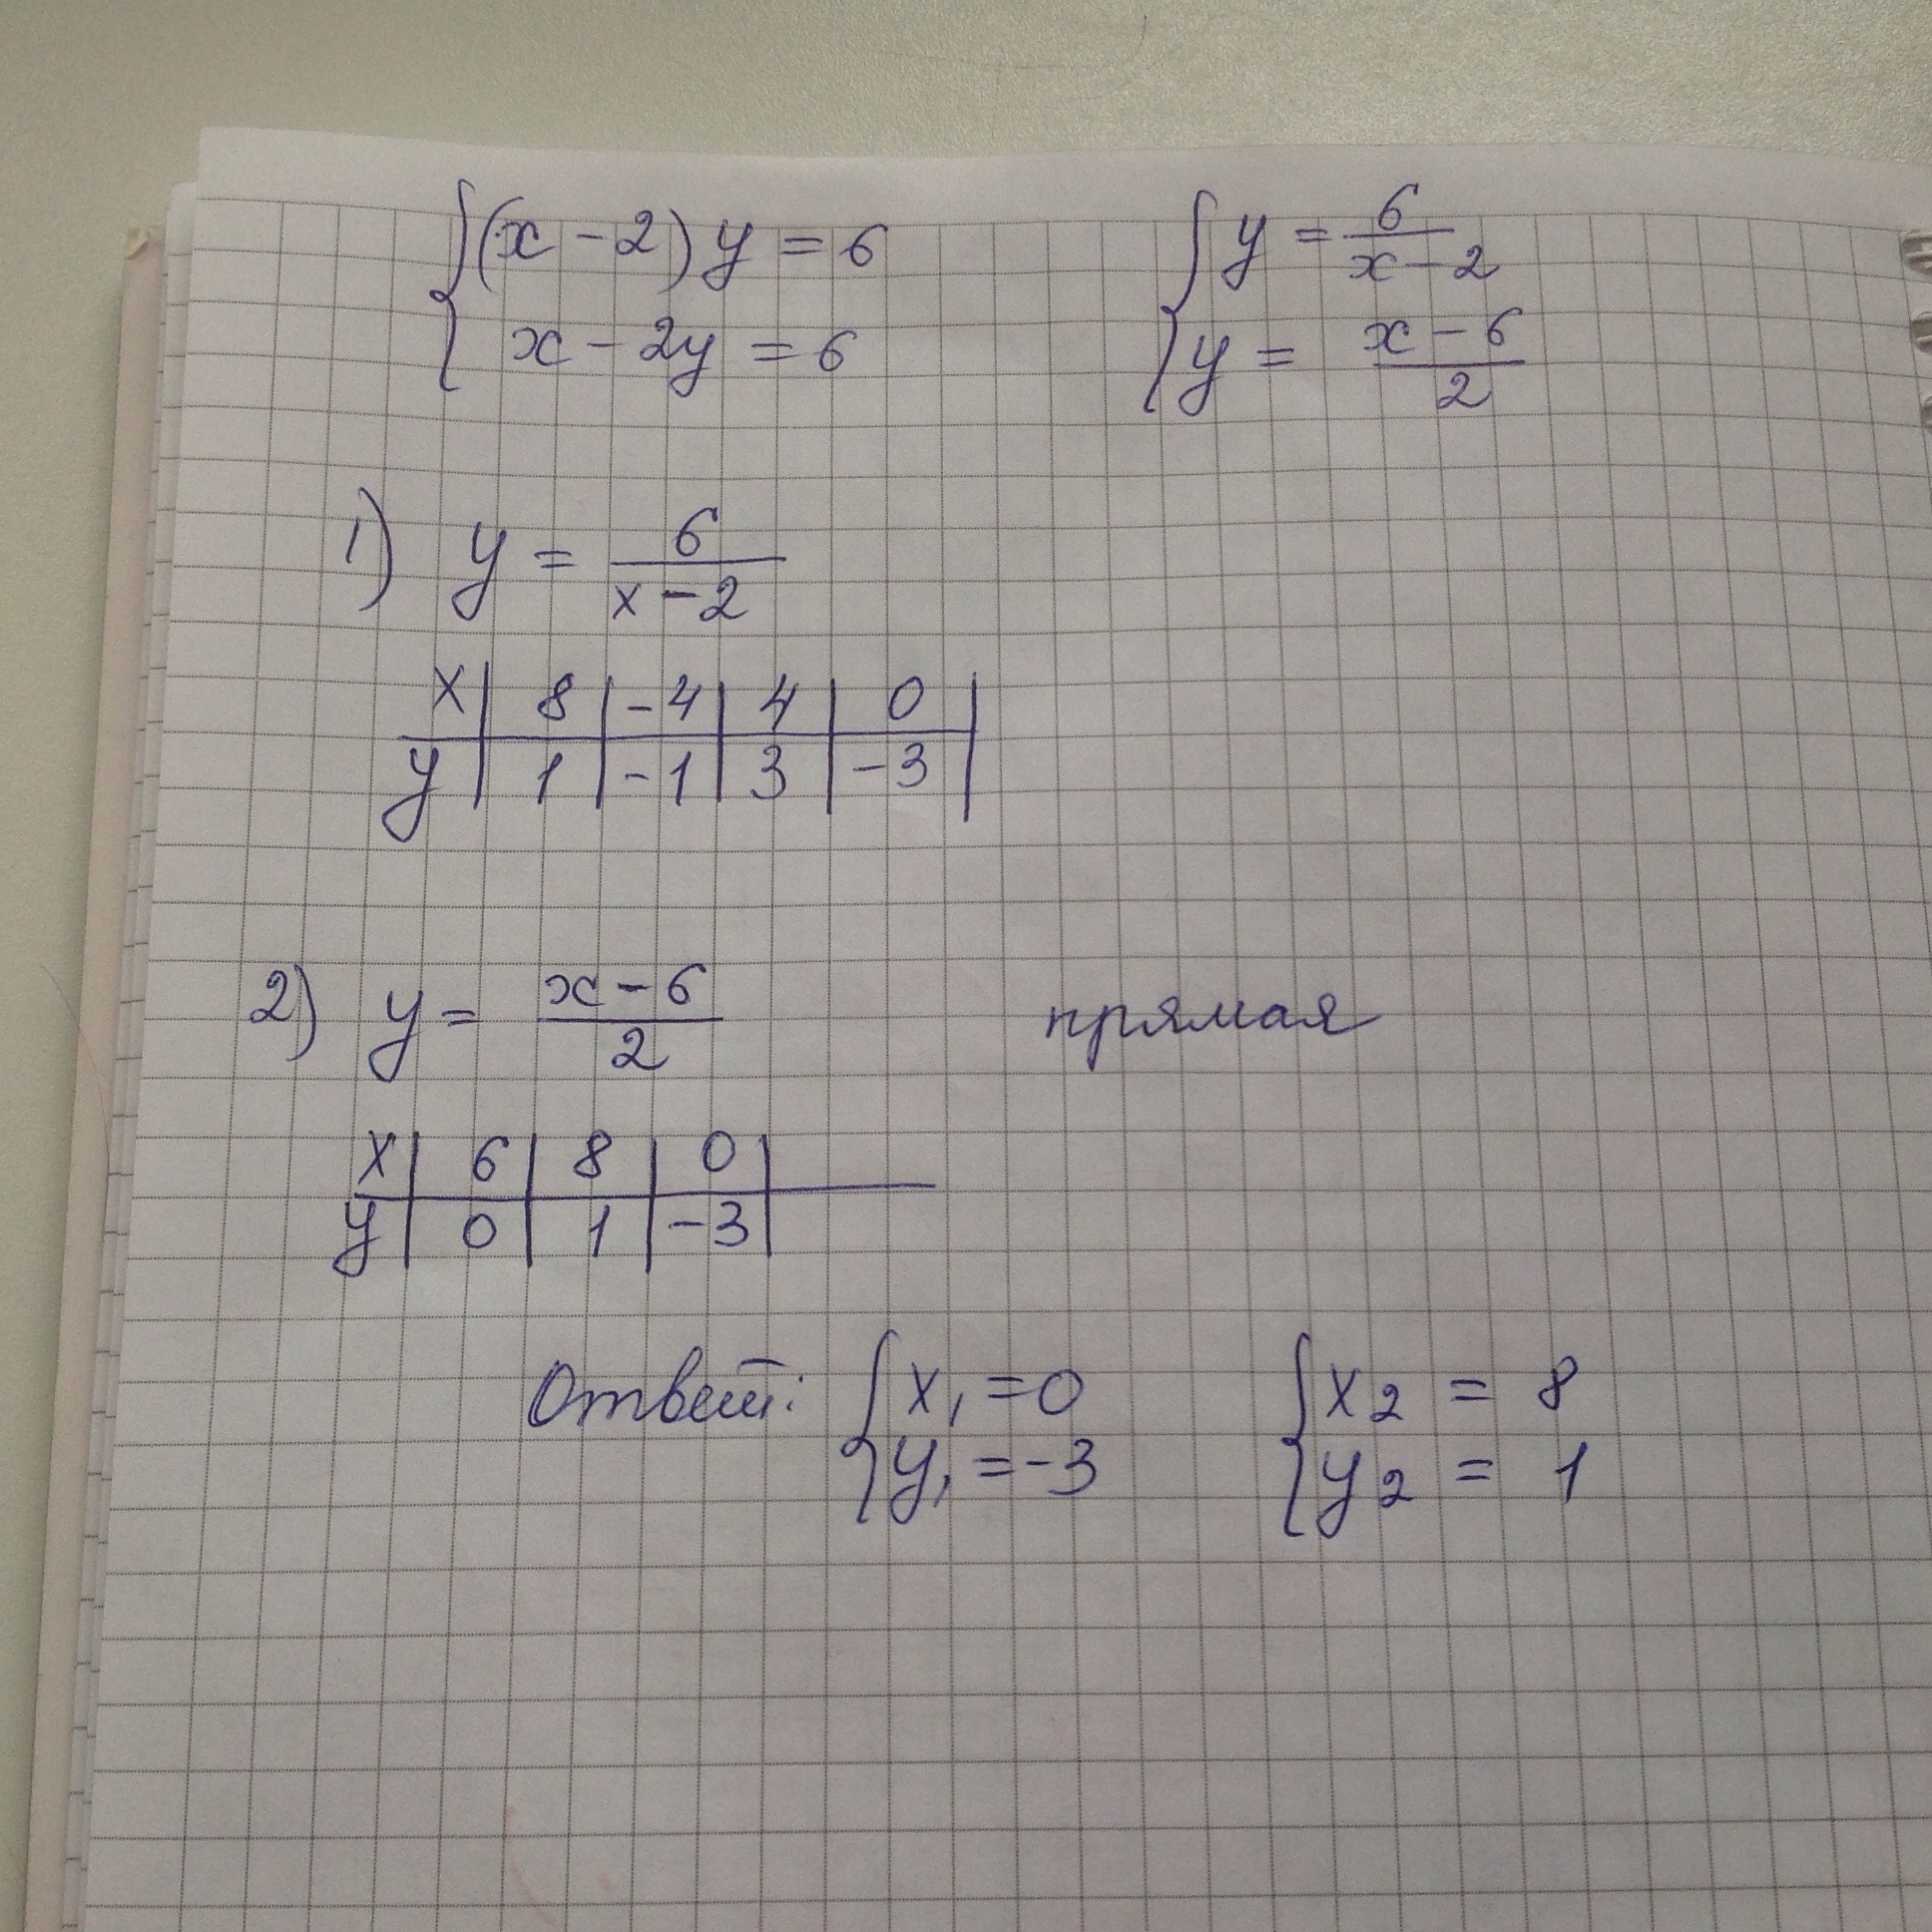 6x 2y 6 0. Решите графически систему уравнений y=x-4 y=x2-6. Решите графически систему уравнений y x2 6x x-y 6. Решите графически систему уравнений x+2y 6 x-4y 0. Решите графически систему уравнений (x-2)y=6 x-2y=6.